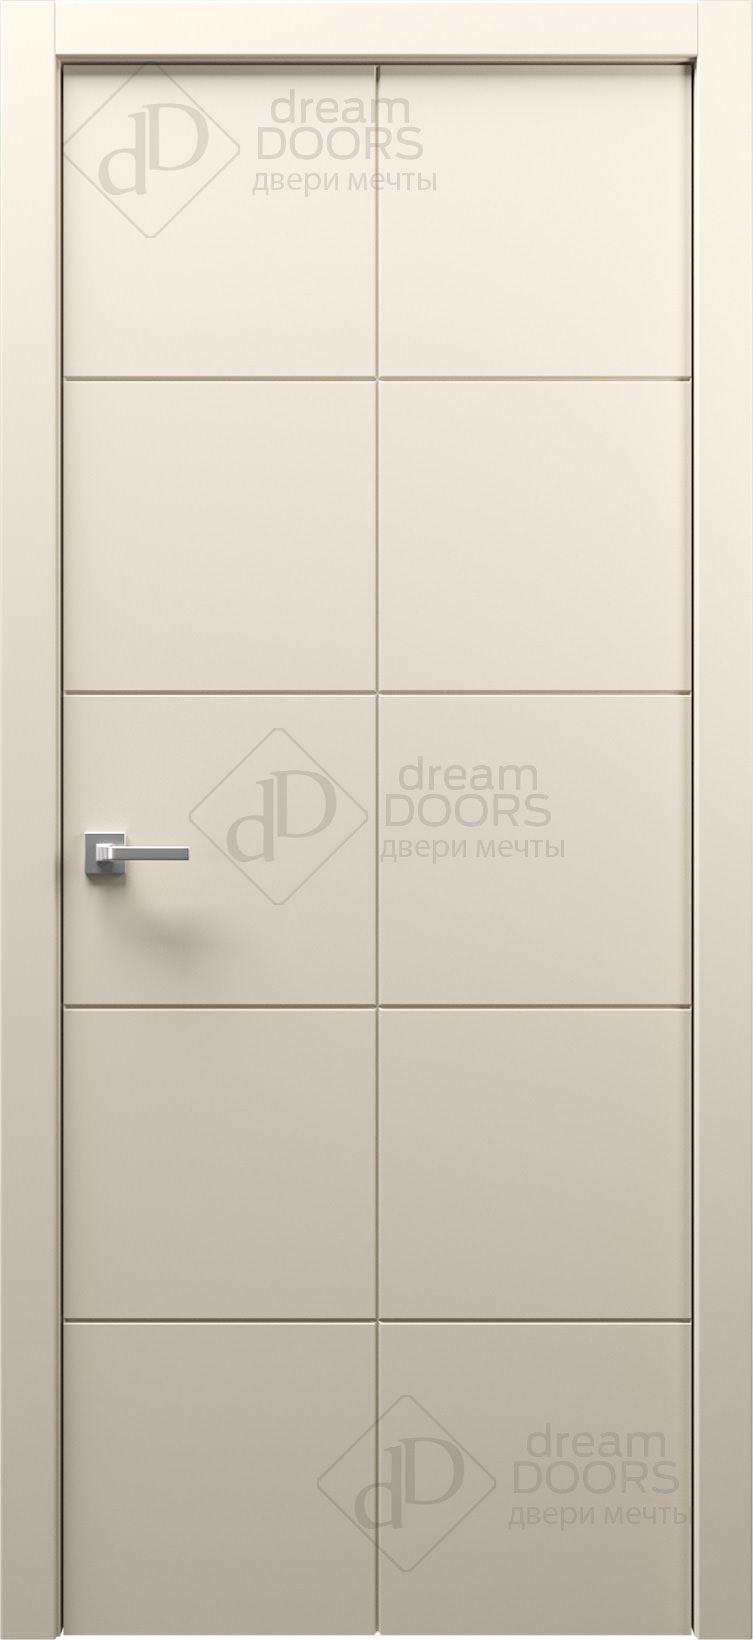 Dream Doors Межкомнатная дверь I25, арт. 6249 - фото №1